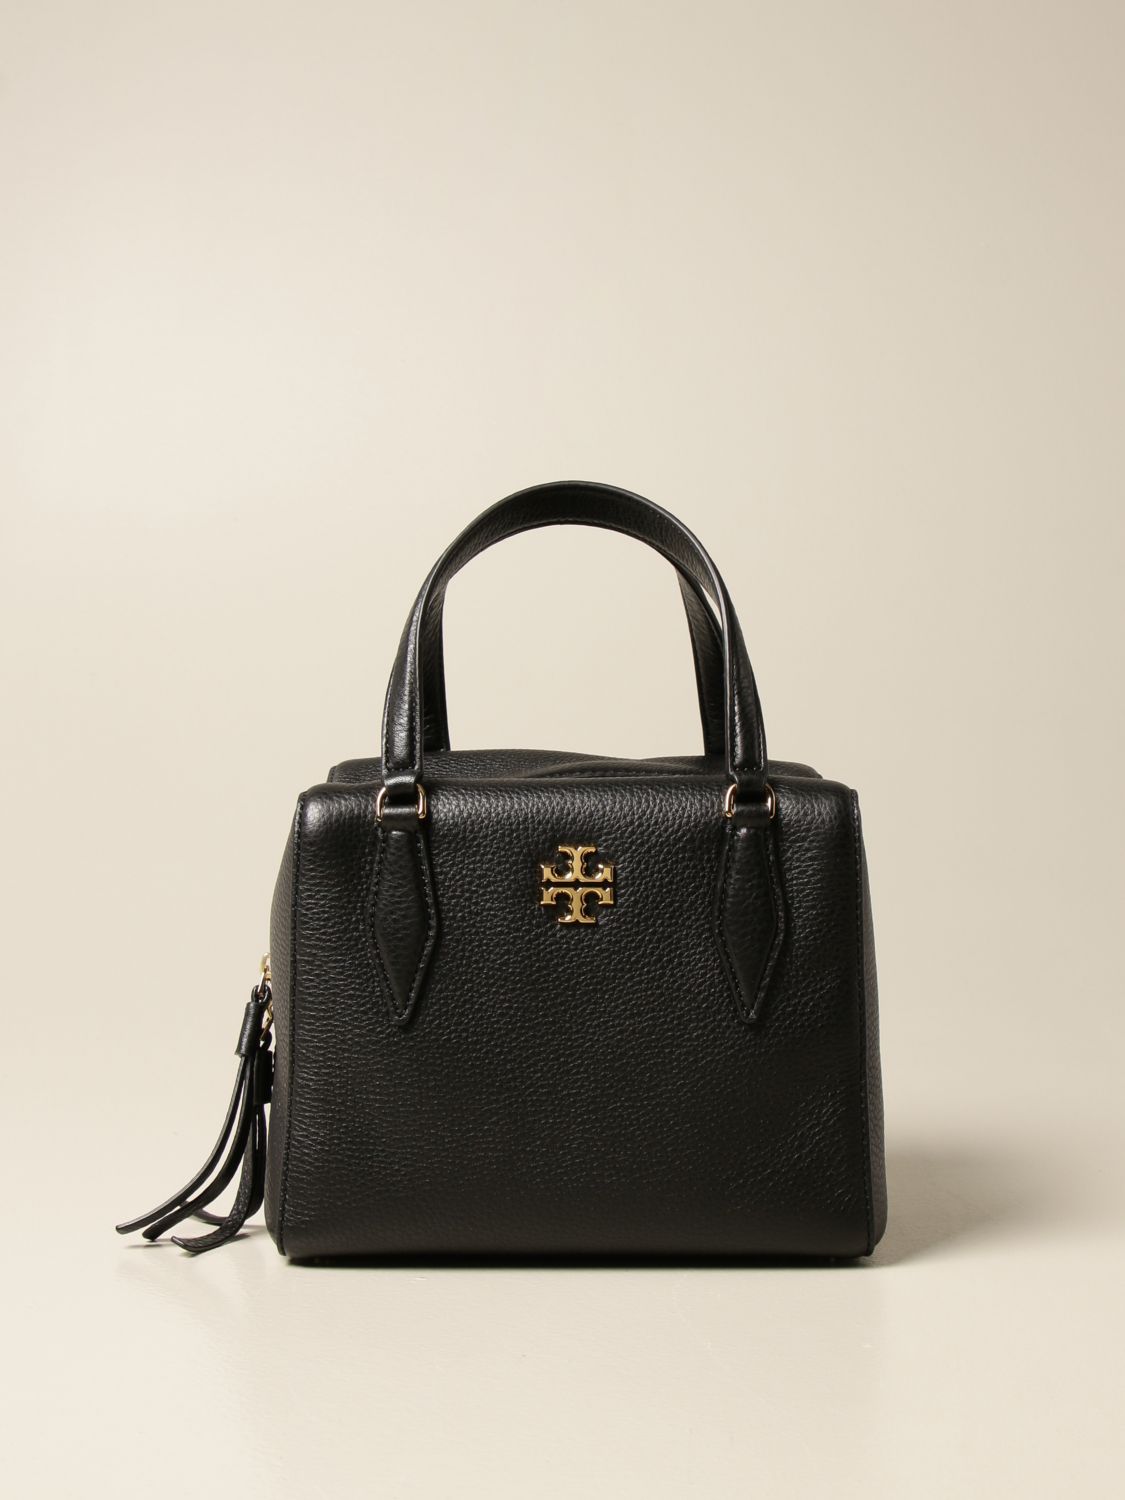 TORY BURCH: Kira Pebbled bag in textured leather - Black | Tory Burch  handbag 76958 online on 